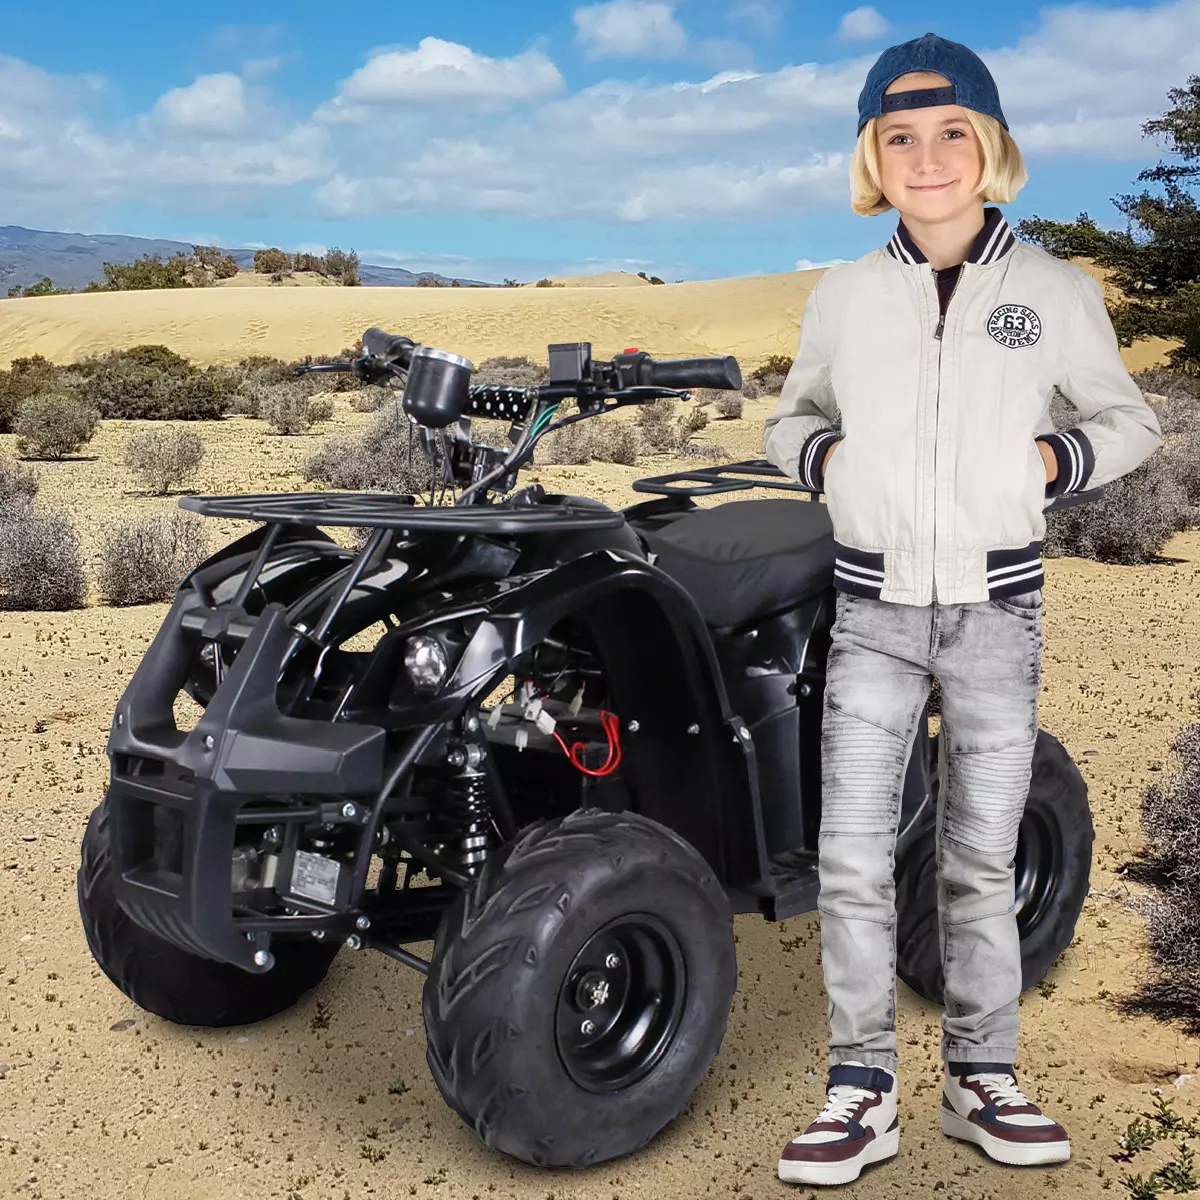 Midiquad Miniquad ATV S-8 125 cc quad de poche quad enfant essence Miweba